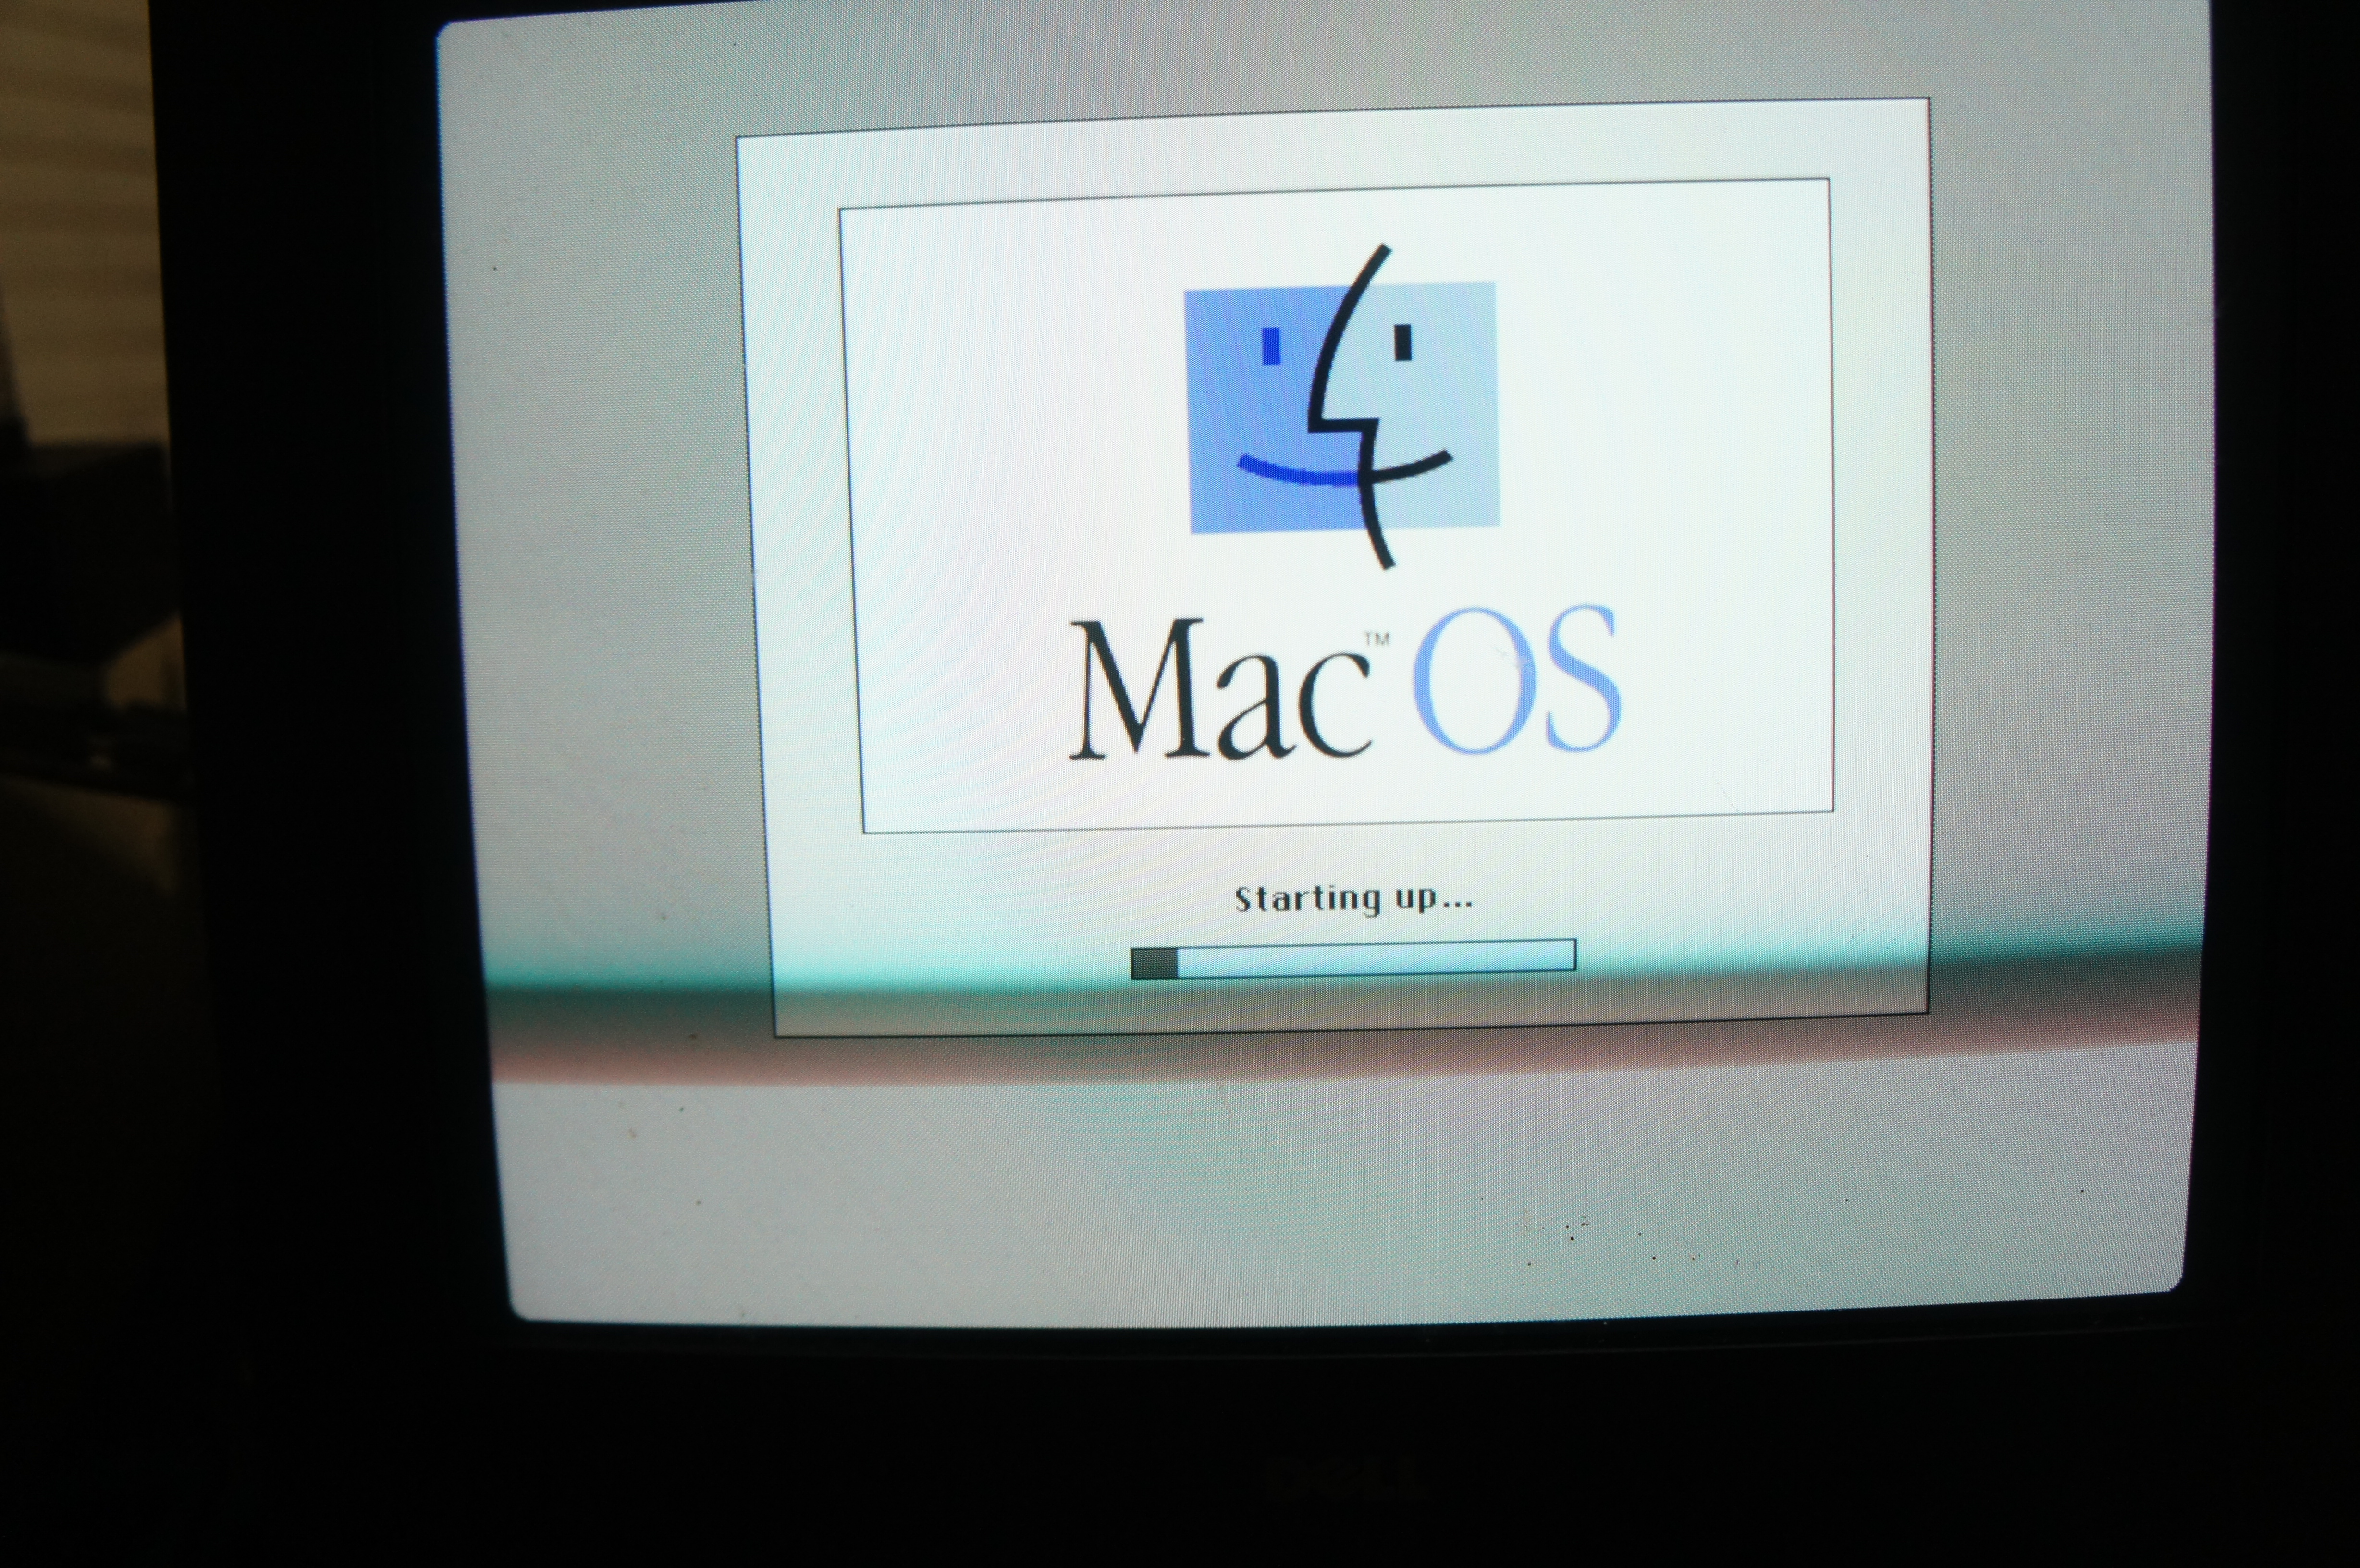 Mac OS 7 boot screen